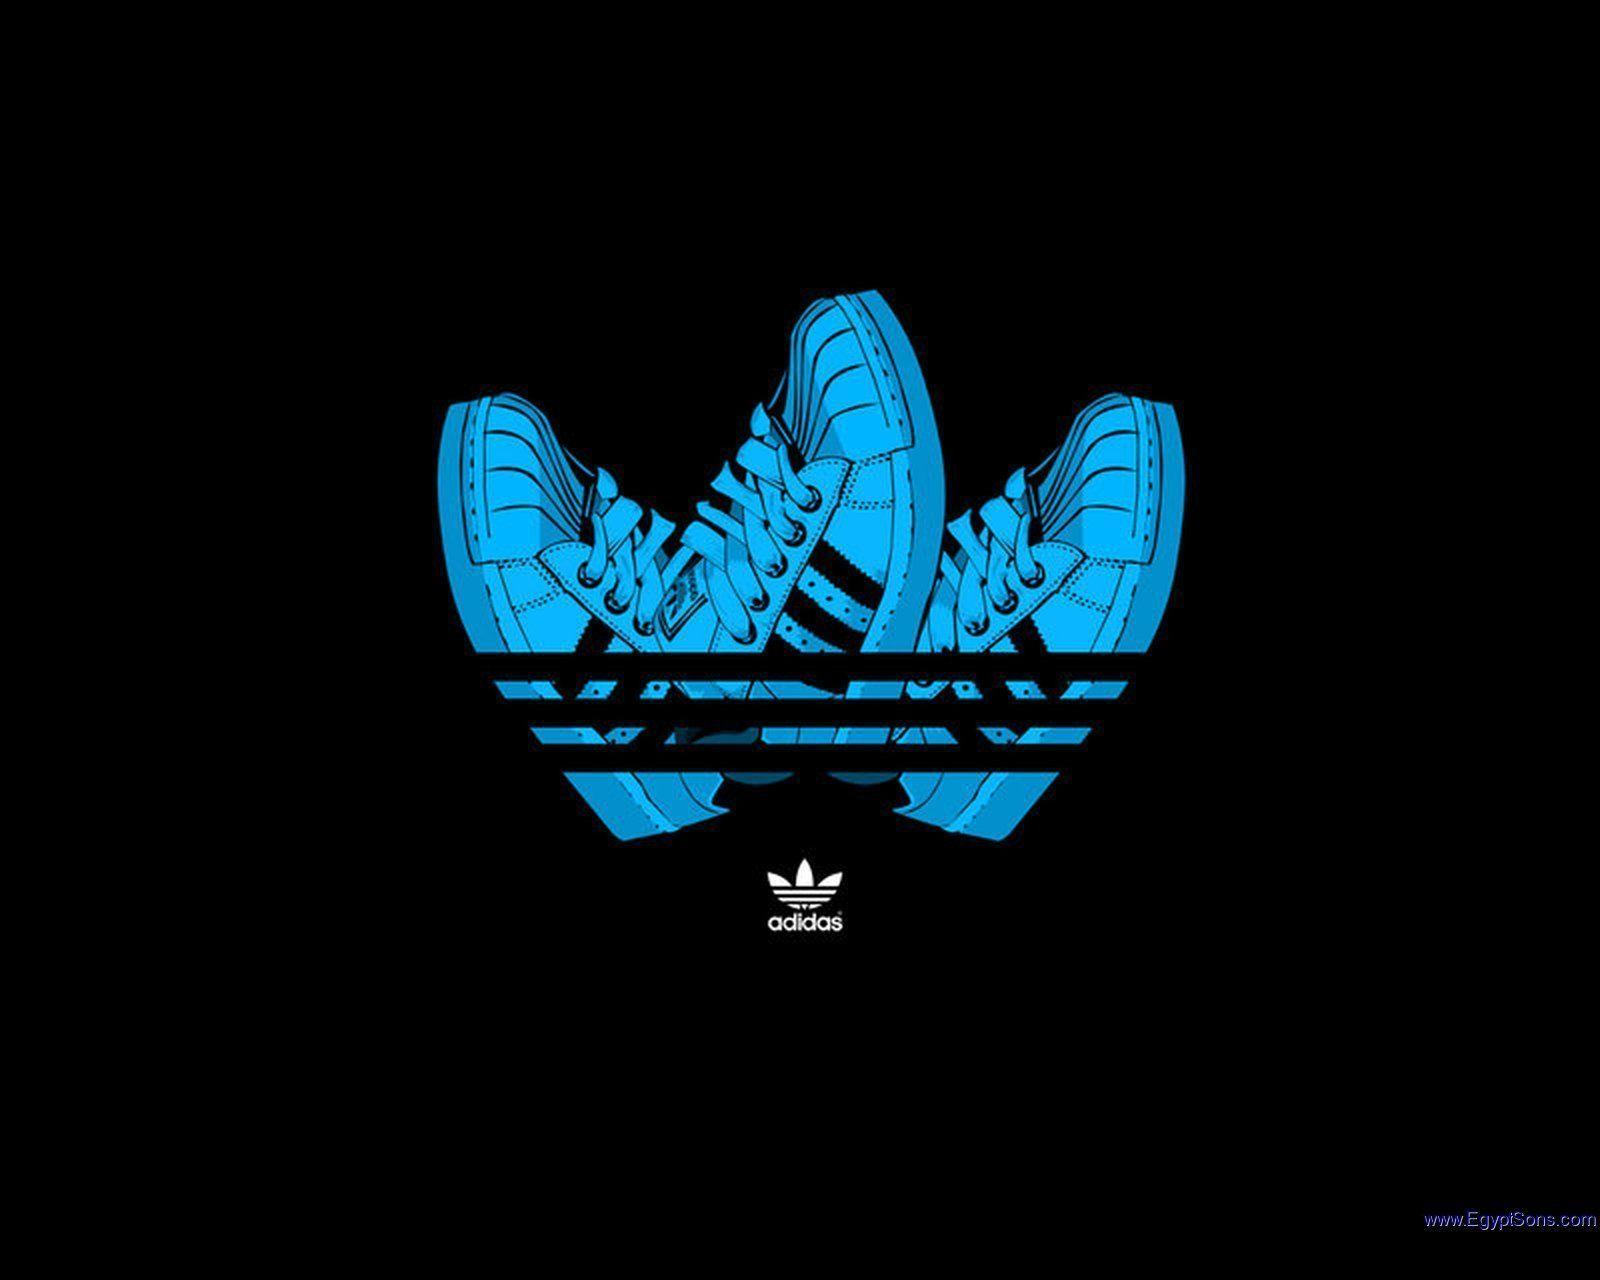 Free download Adidas Originals Logo Wallpapers [1600x1280] for your Desktop, Mobile & Tablet | Explore 71+ Adidas Originals Wallpaper | Adidas Wallpapers, Adidas Wallpaper, Adidas Originals Logo